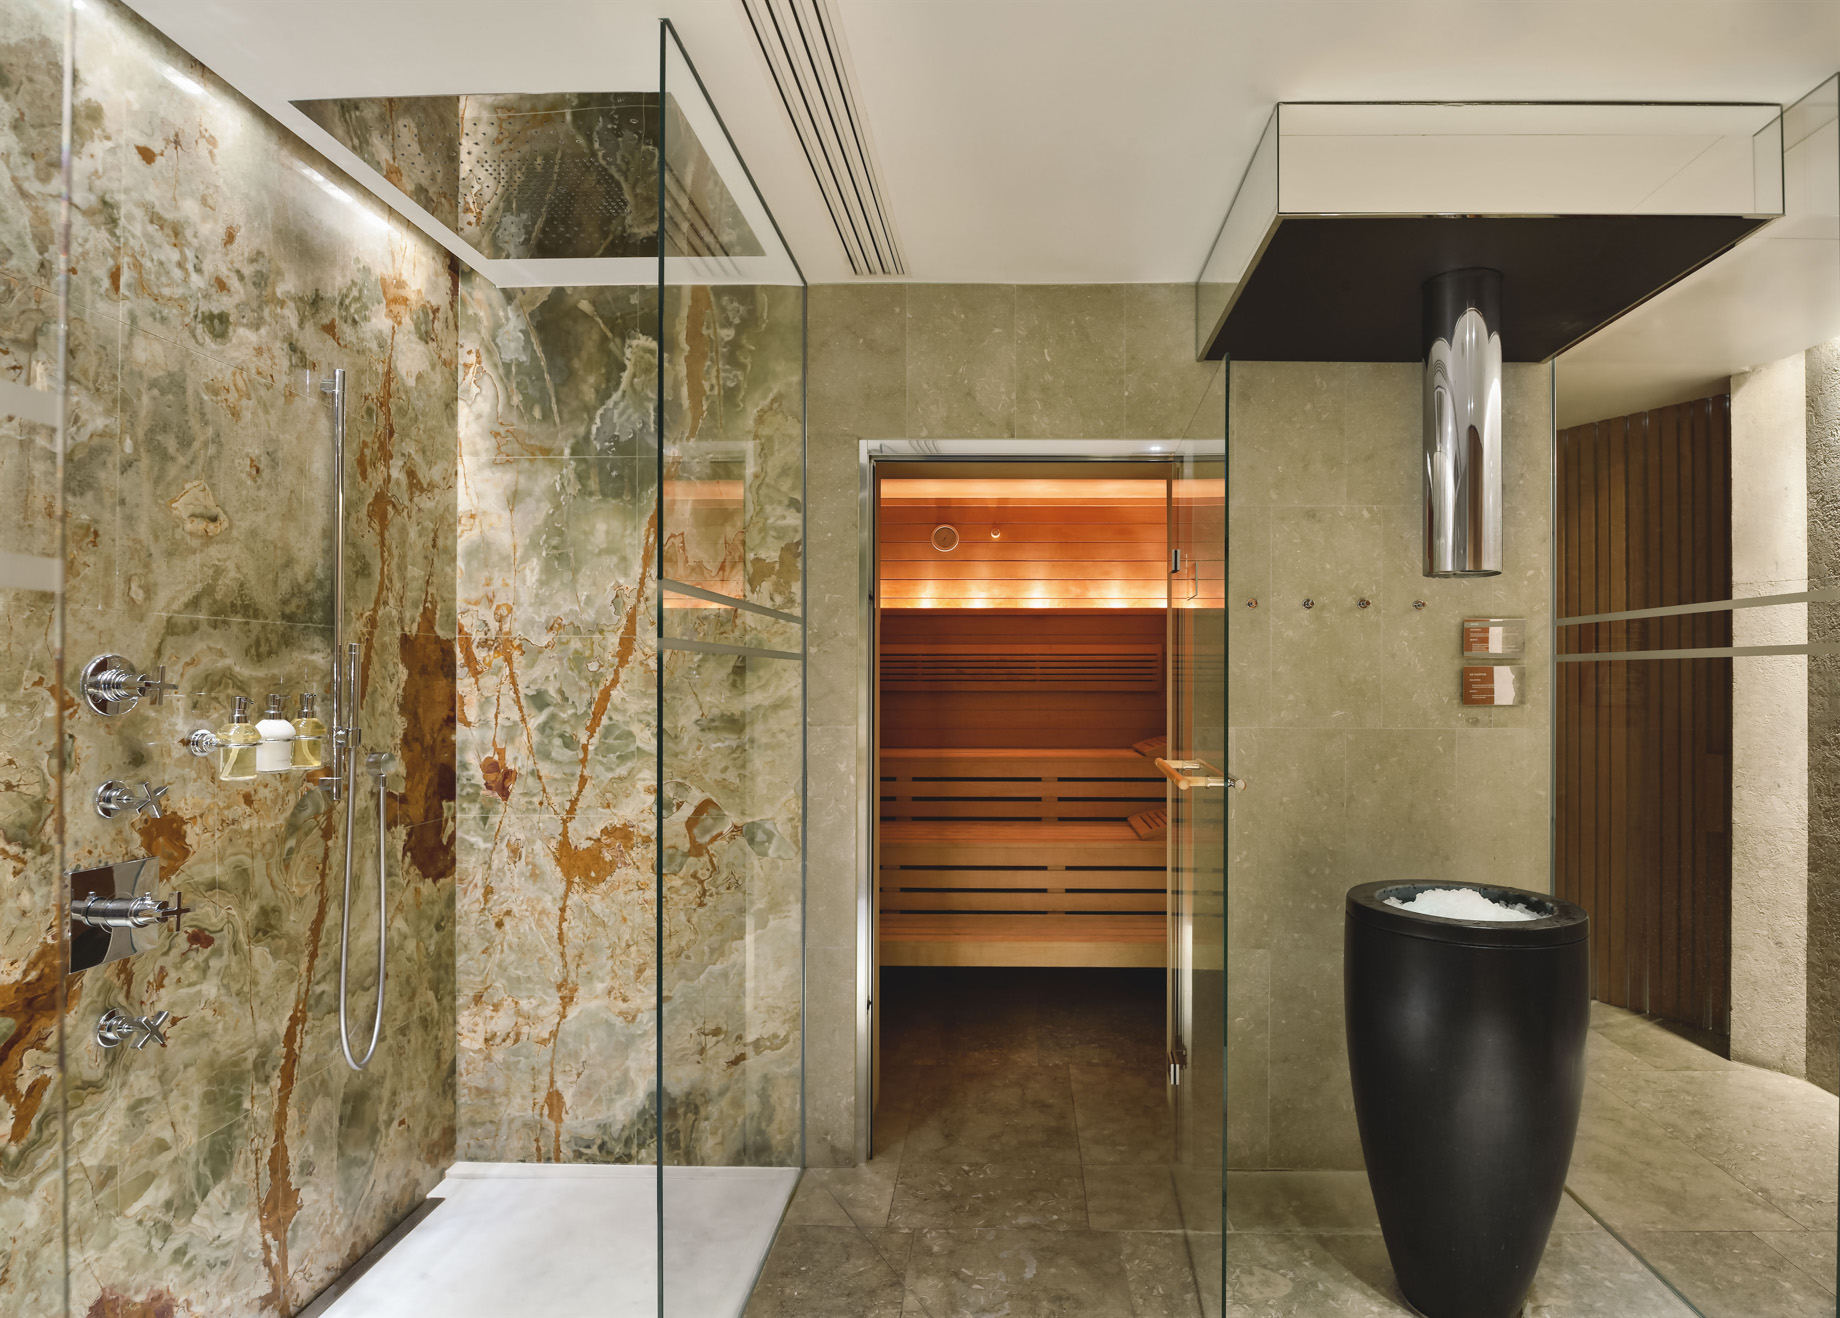 Bvlgari Hotel London – Knightsbridge, London, UK – Spa Ice Shower and Sauna